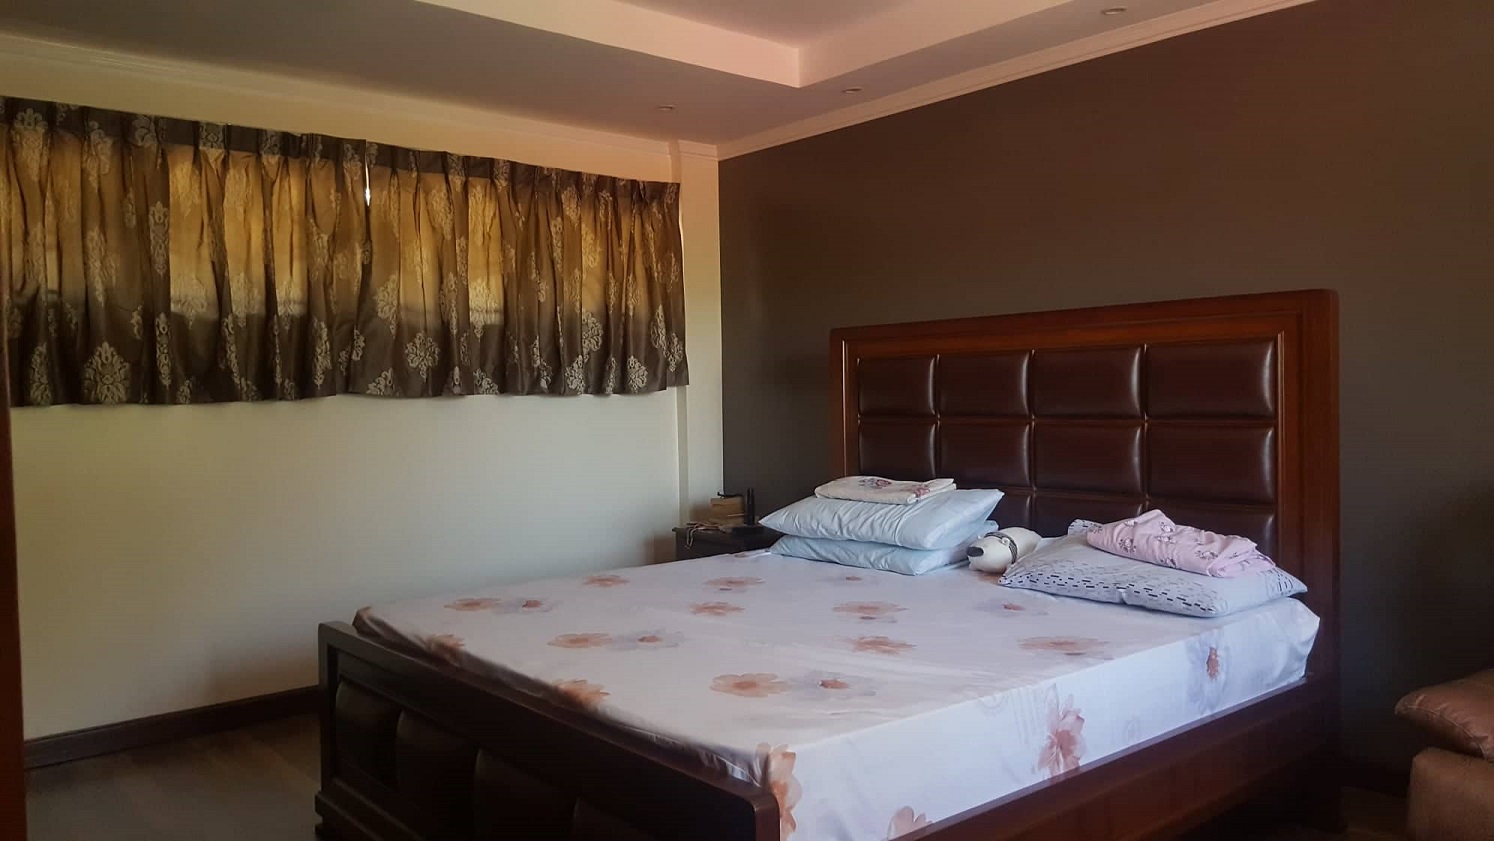 5-bedrooms-furnished-house-in-banilad-cebu-city